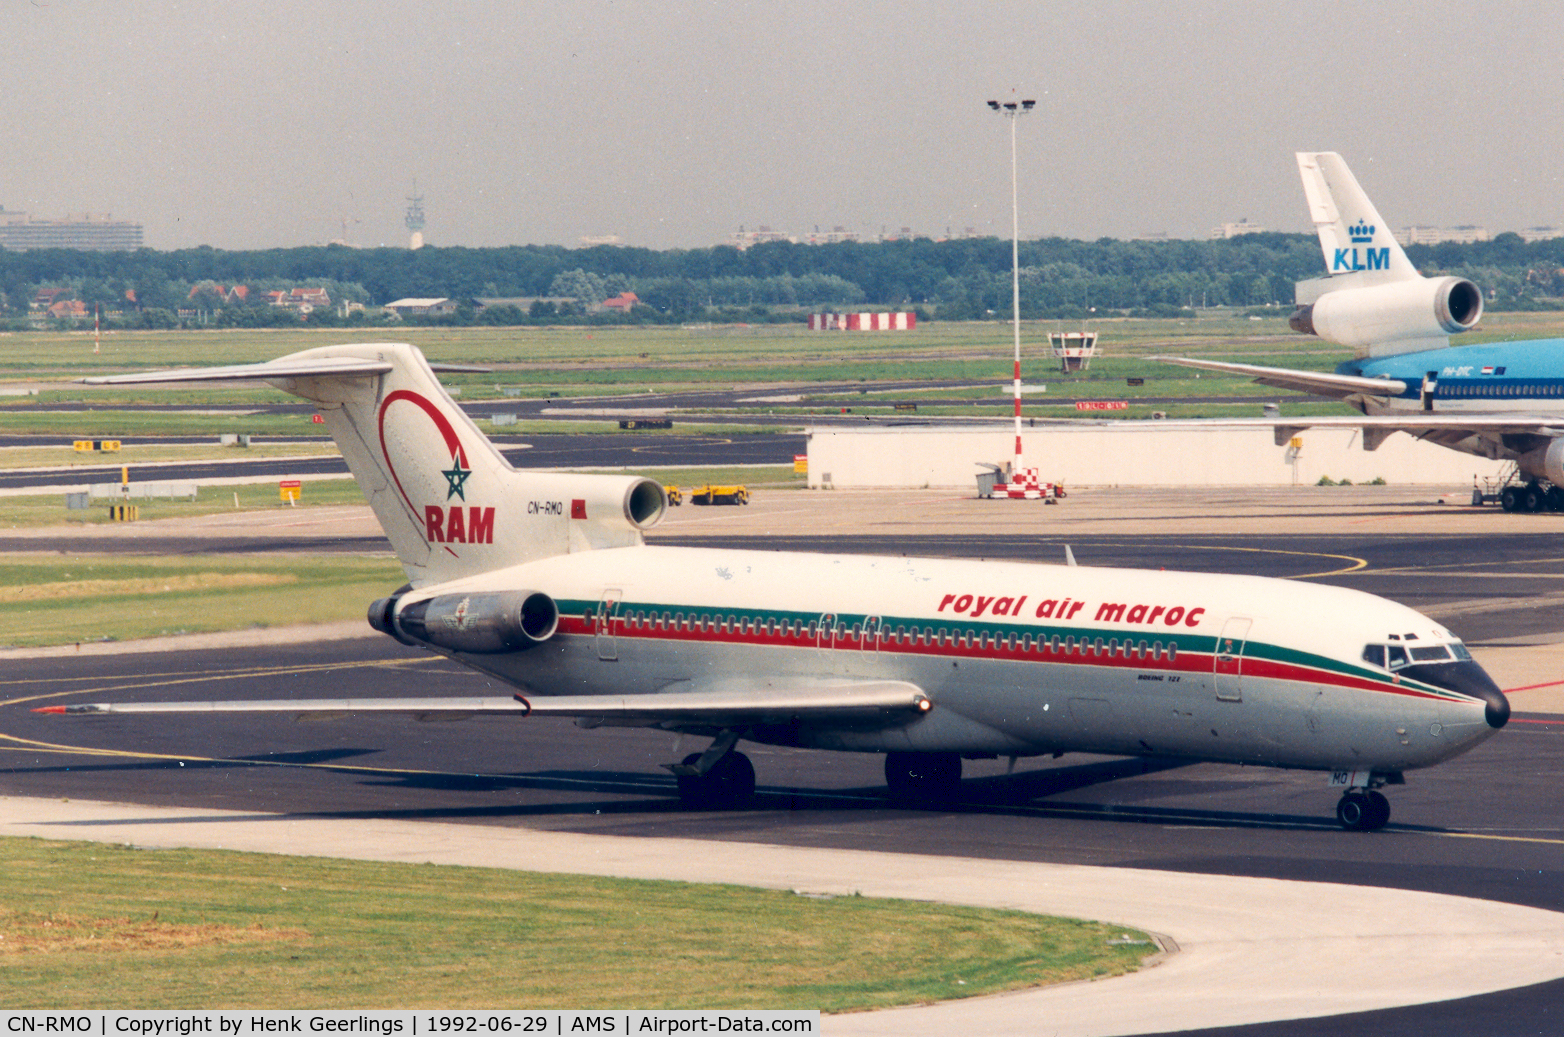 CN-RMO, 1976 Boeing 727-2B6 C/N 21297/1236, Royal Air Maroc